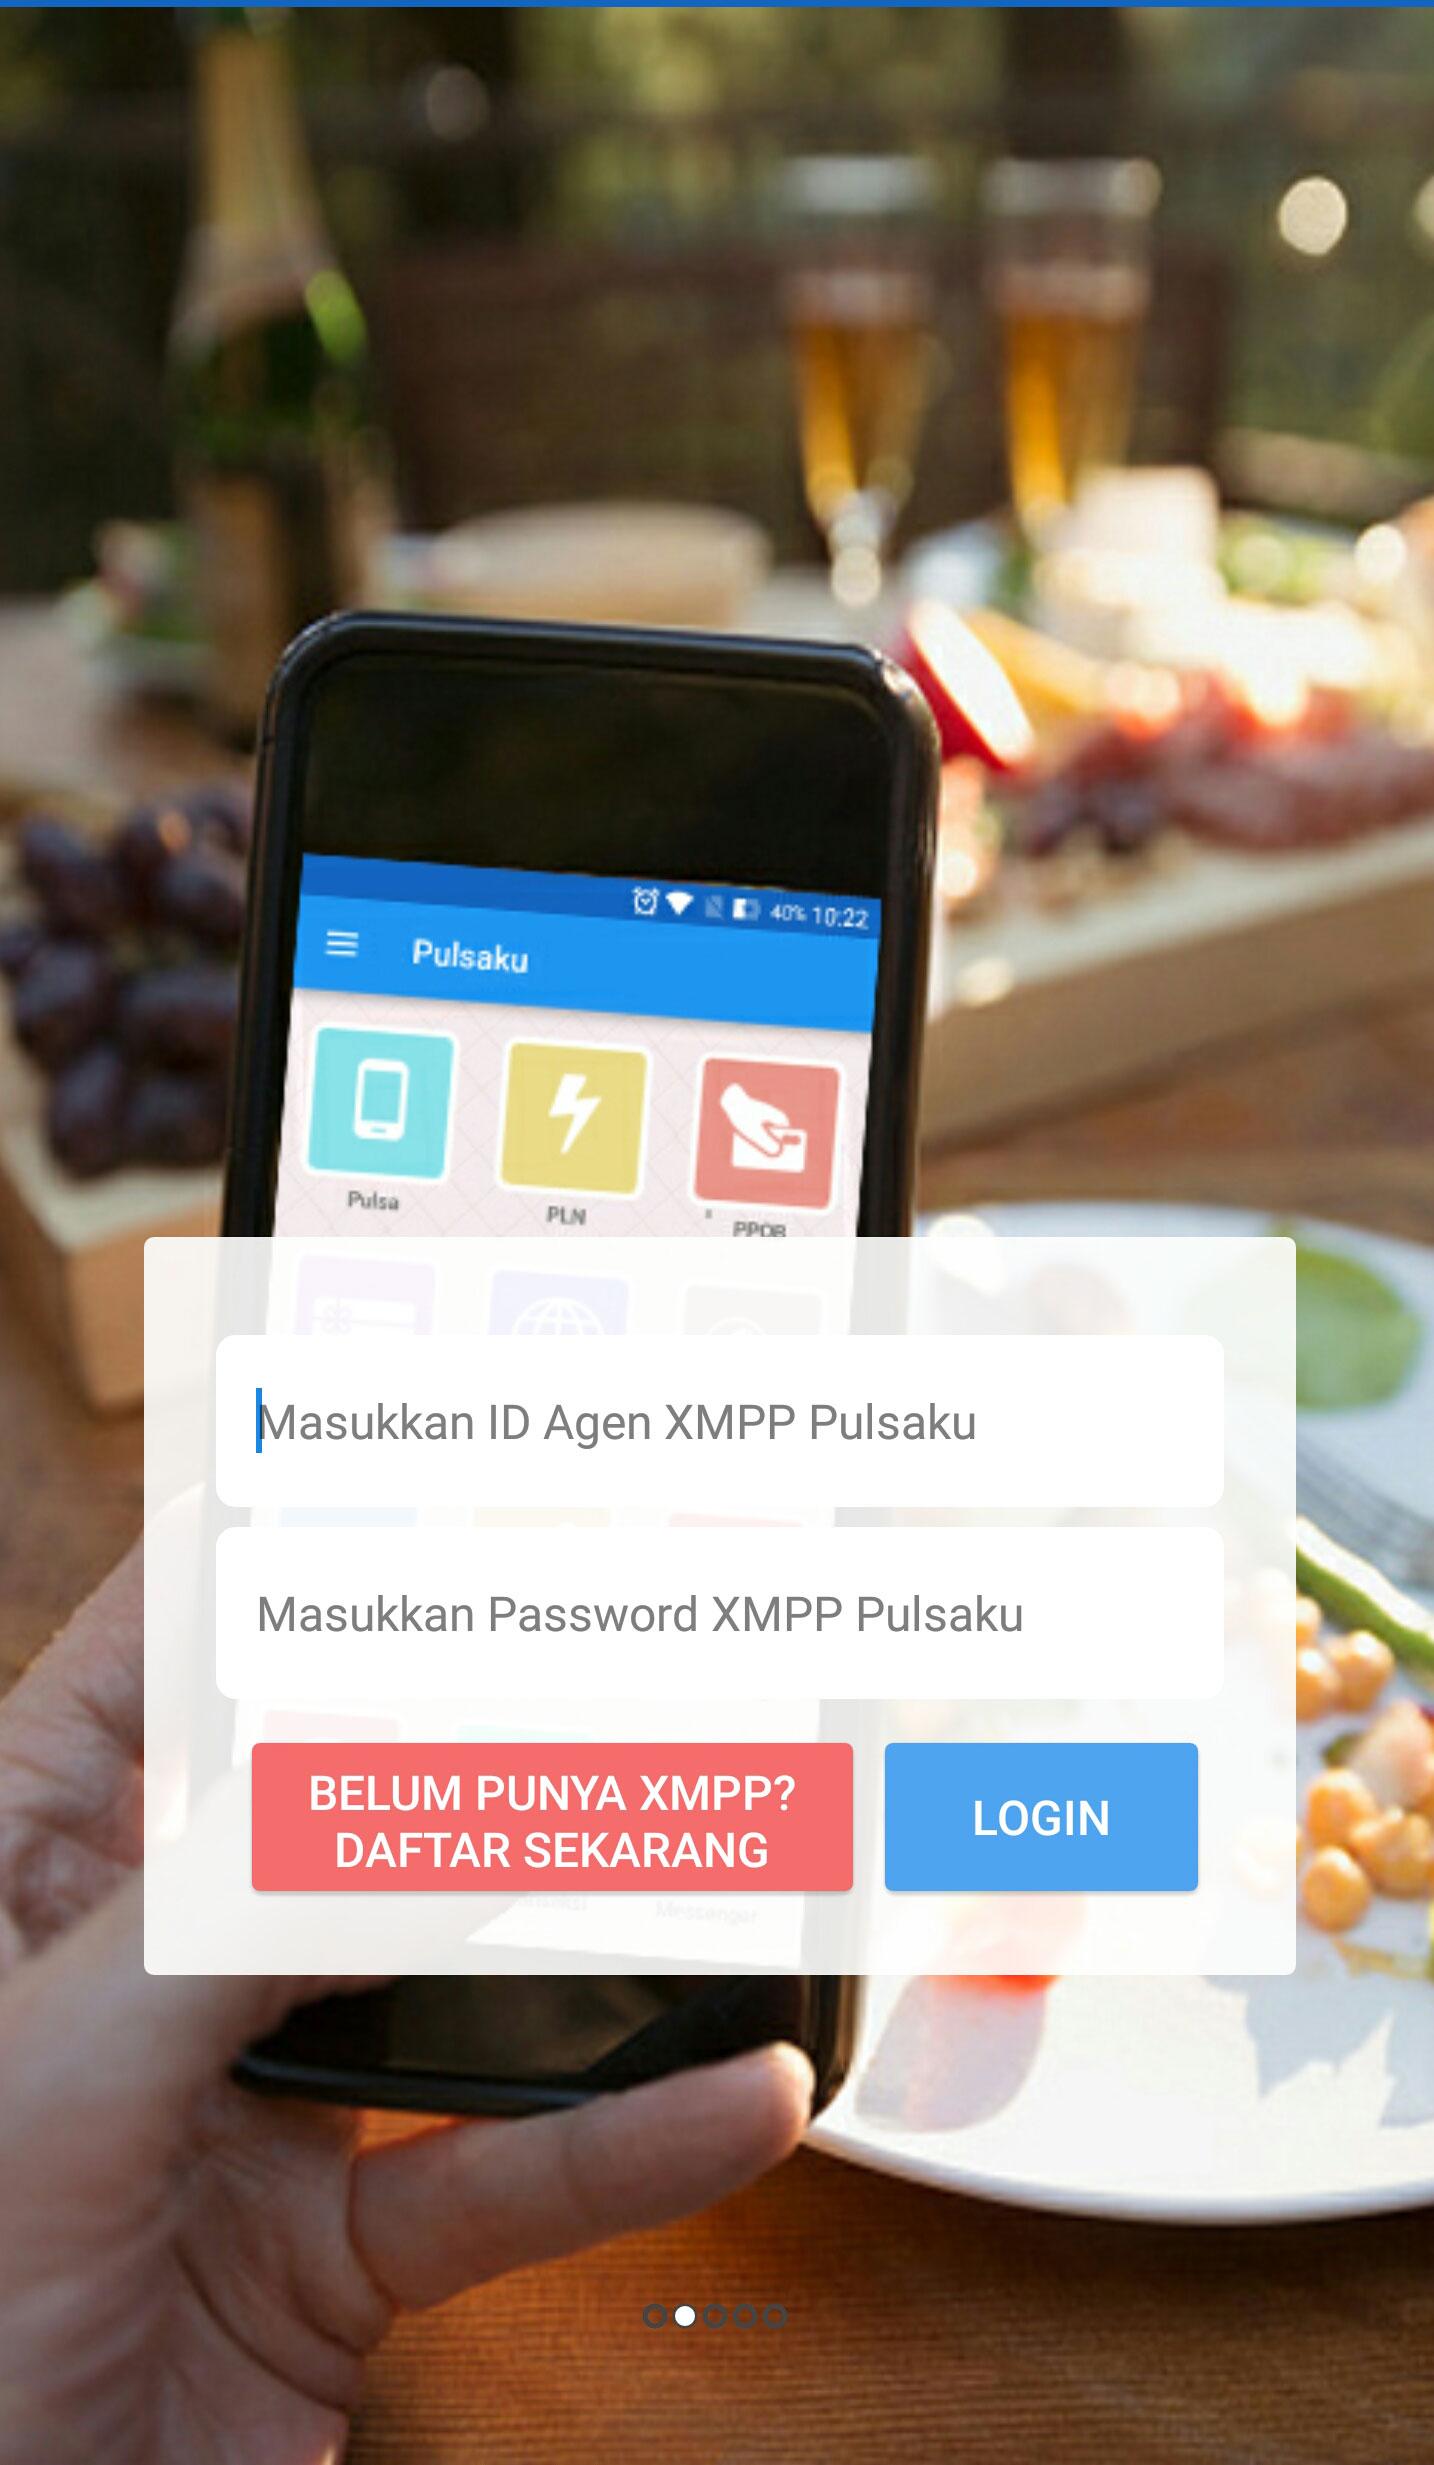 Transaksi Pulsaku Indonesia for Android - APK Download - 